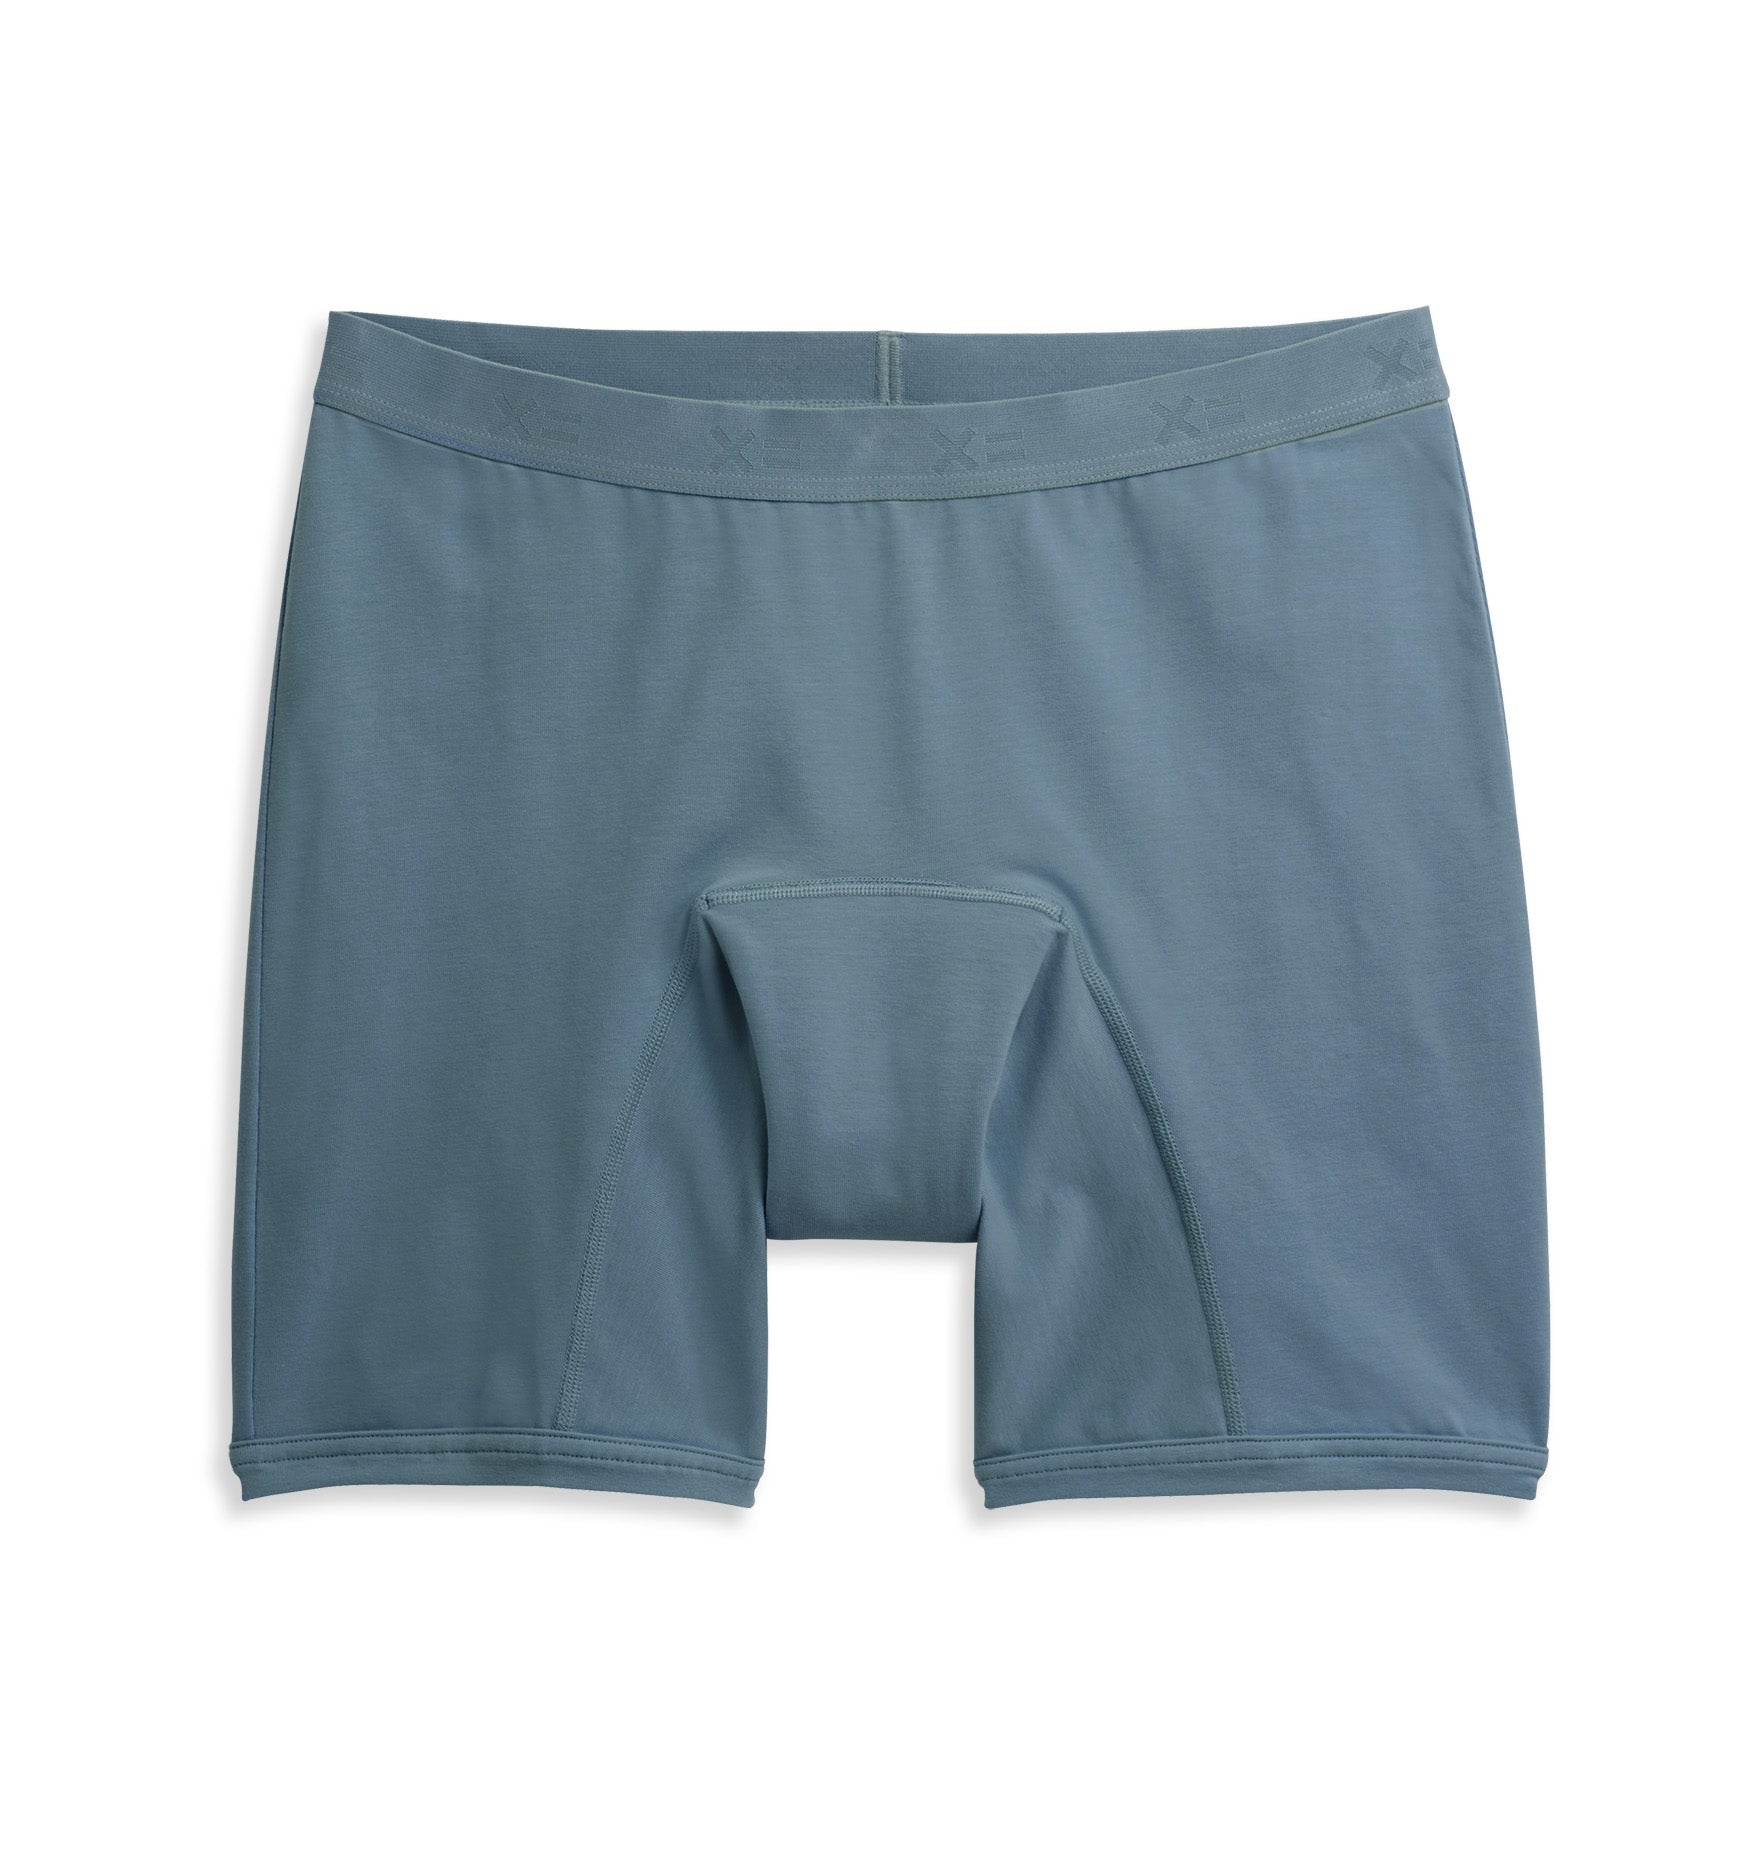 Tucking Boy Shorts - Bluestone